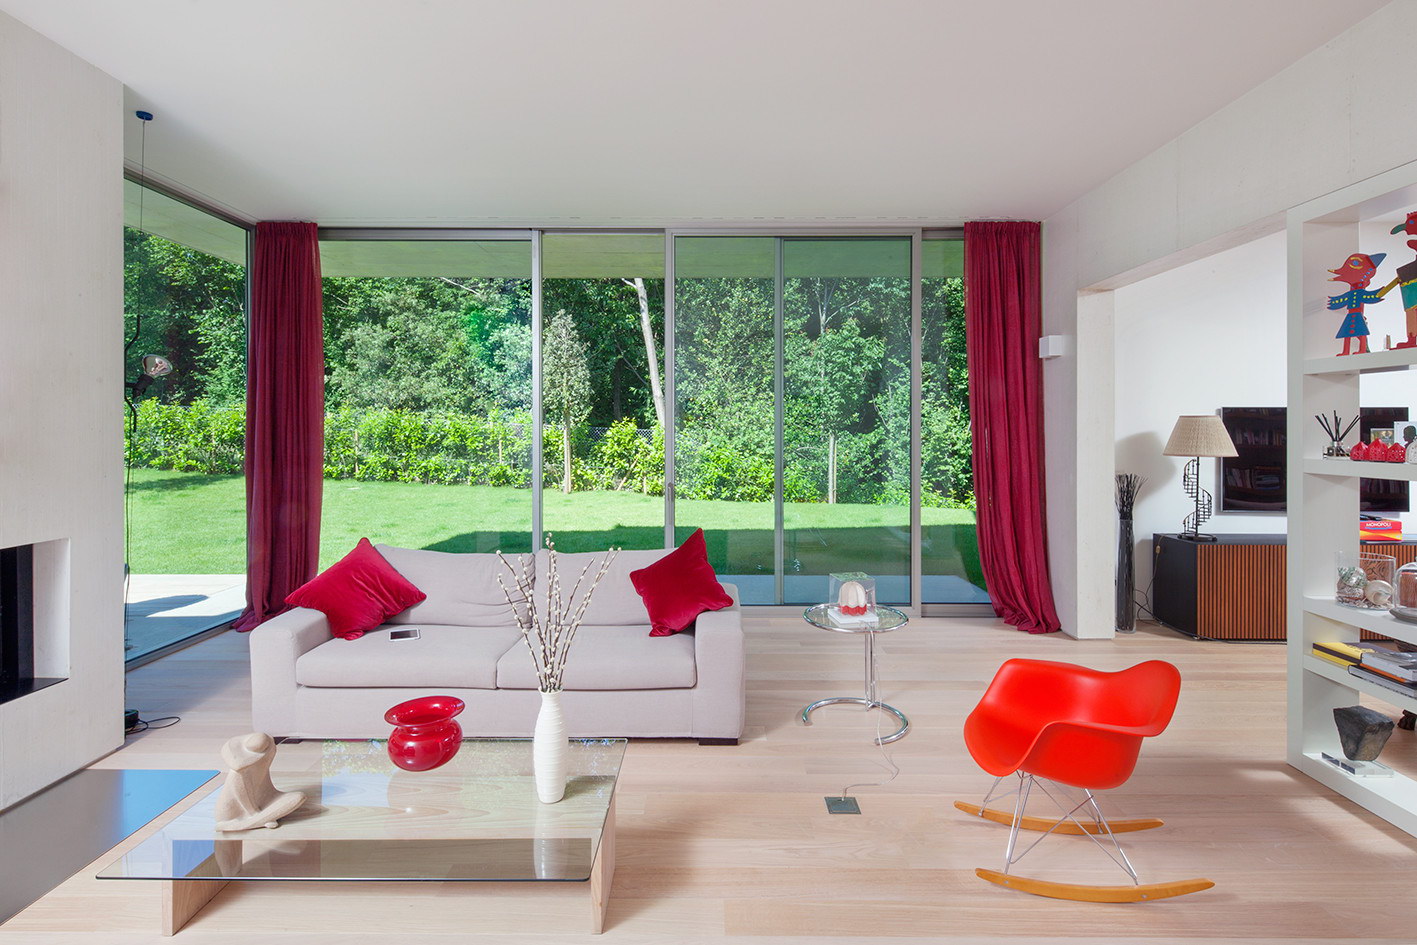 Villa G – Family House in Lugano by SCAPE